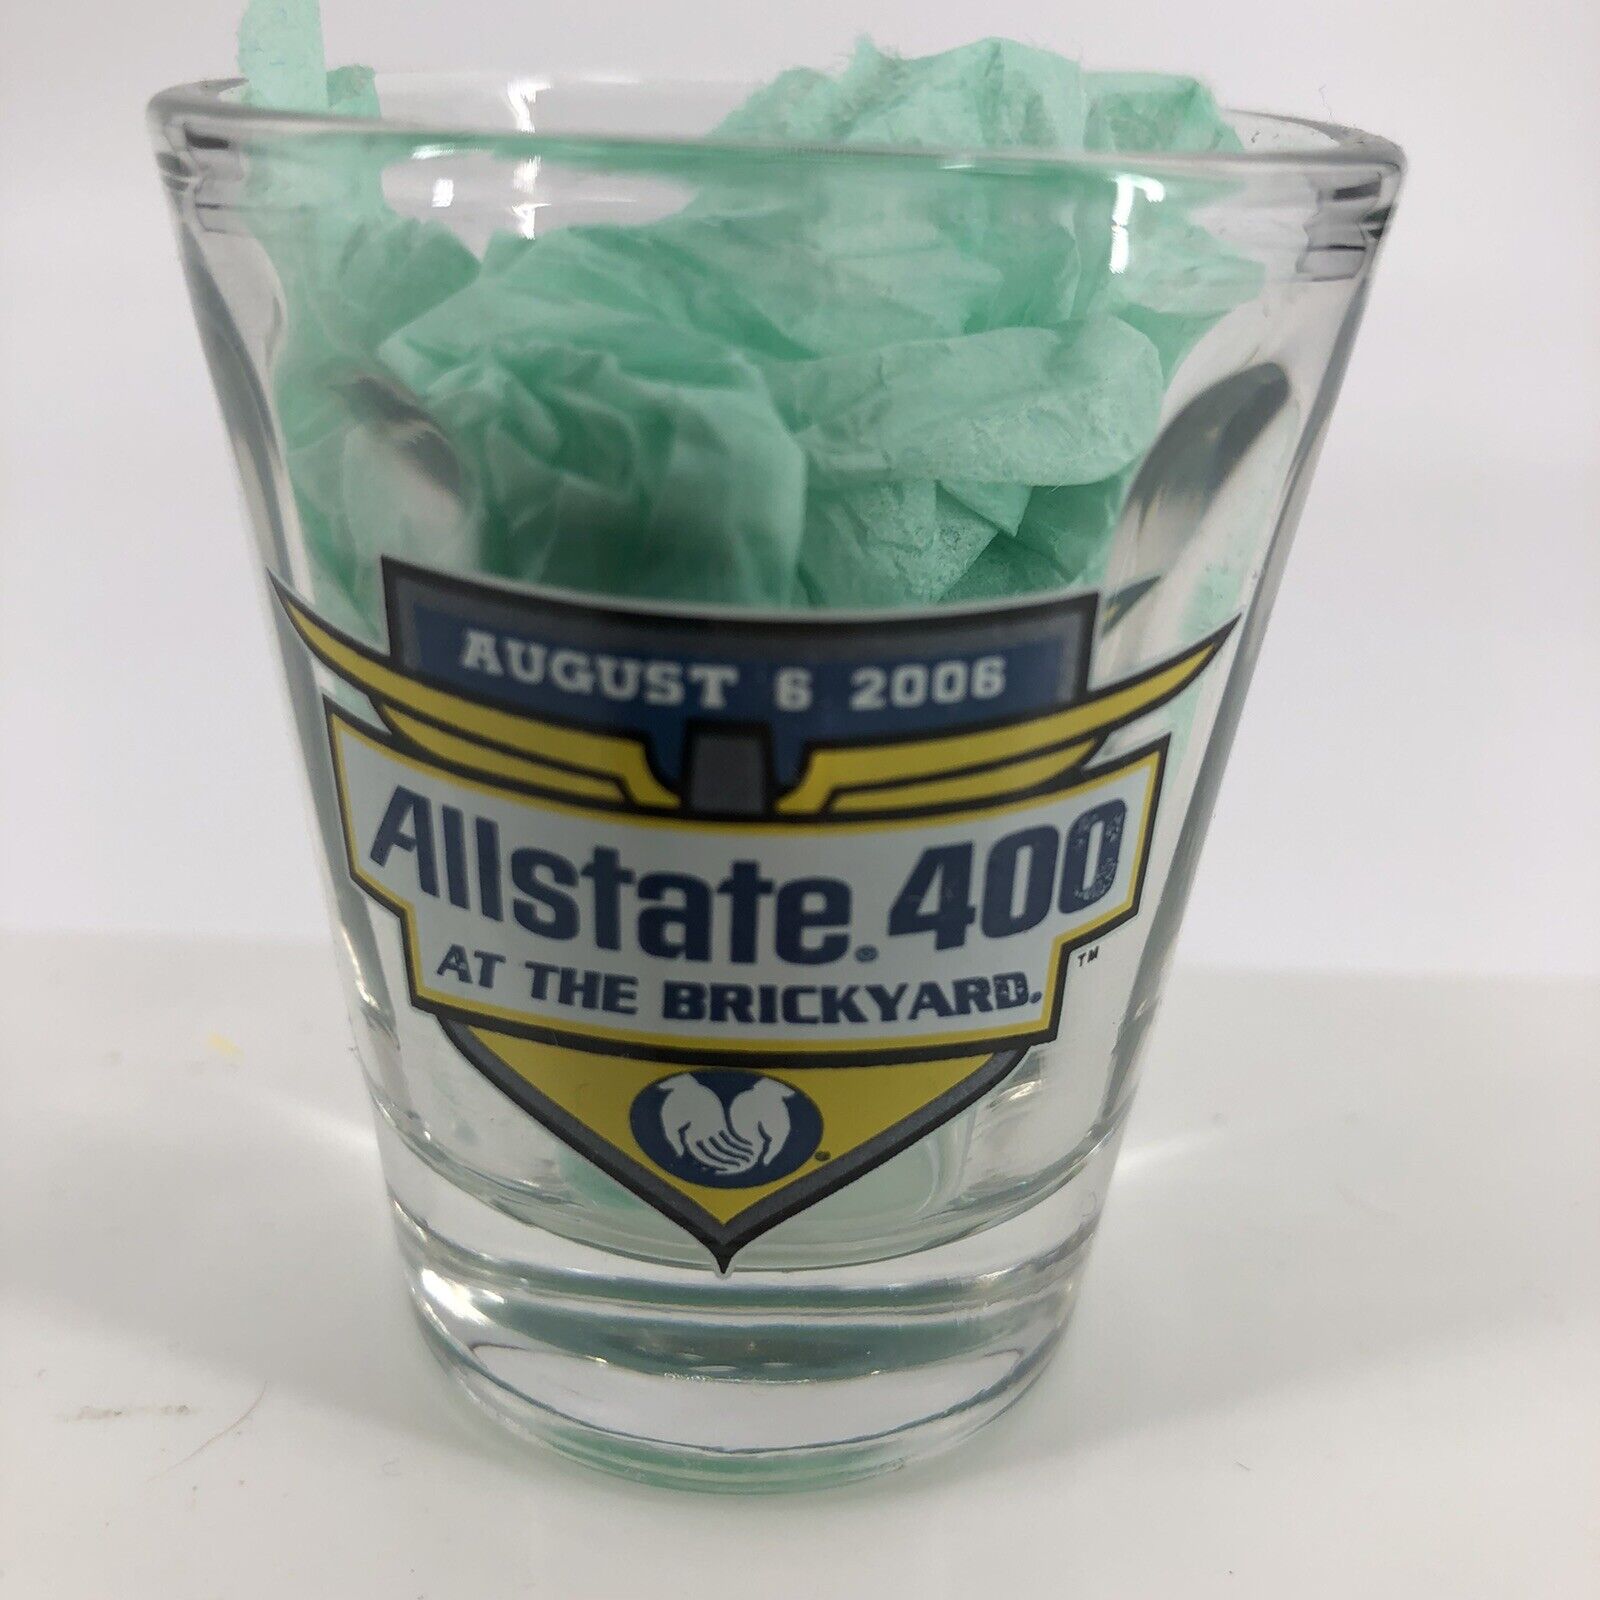 2006 Allstate Brickyard 400 NASCAR Shot Glass - Indianapolis Motor Speedway